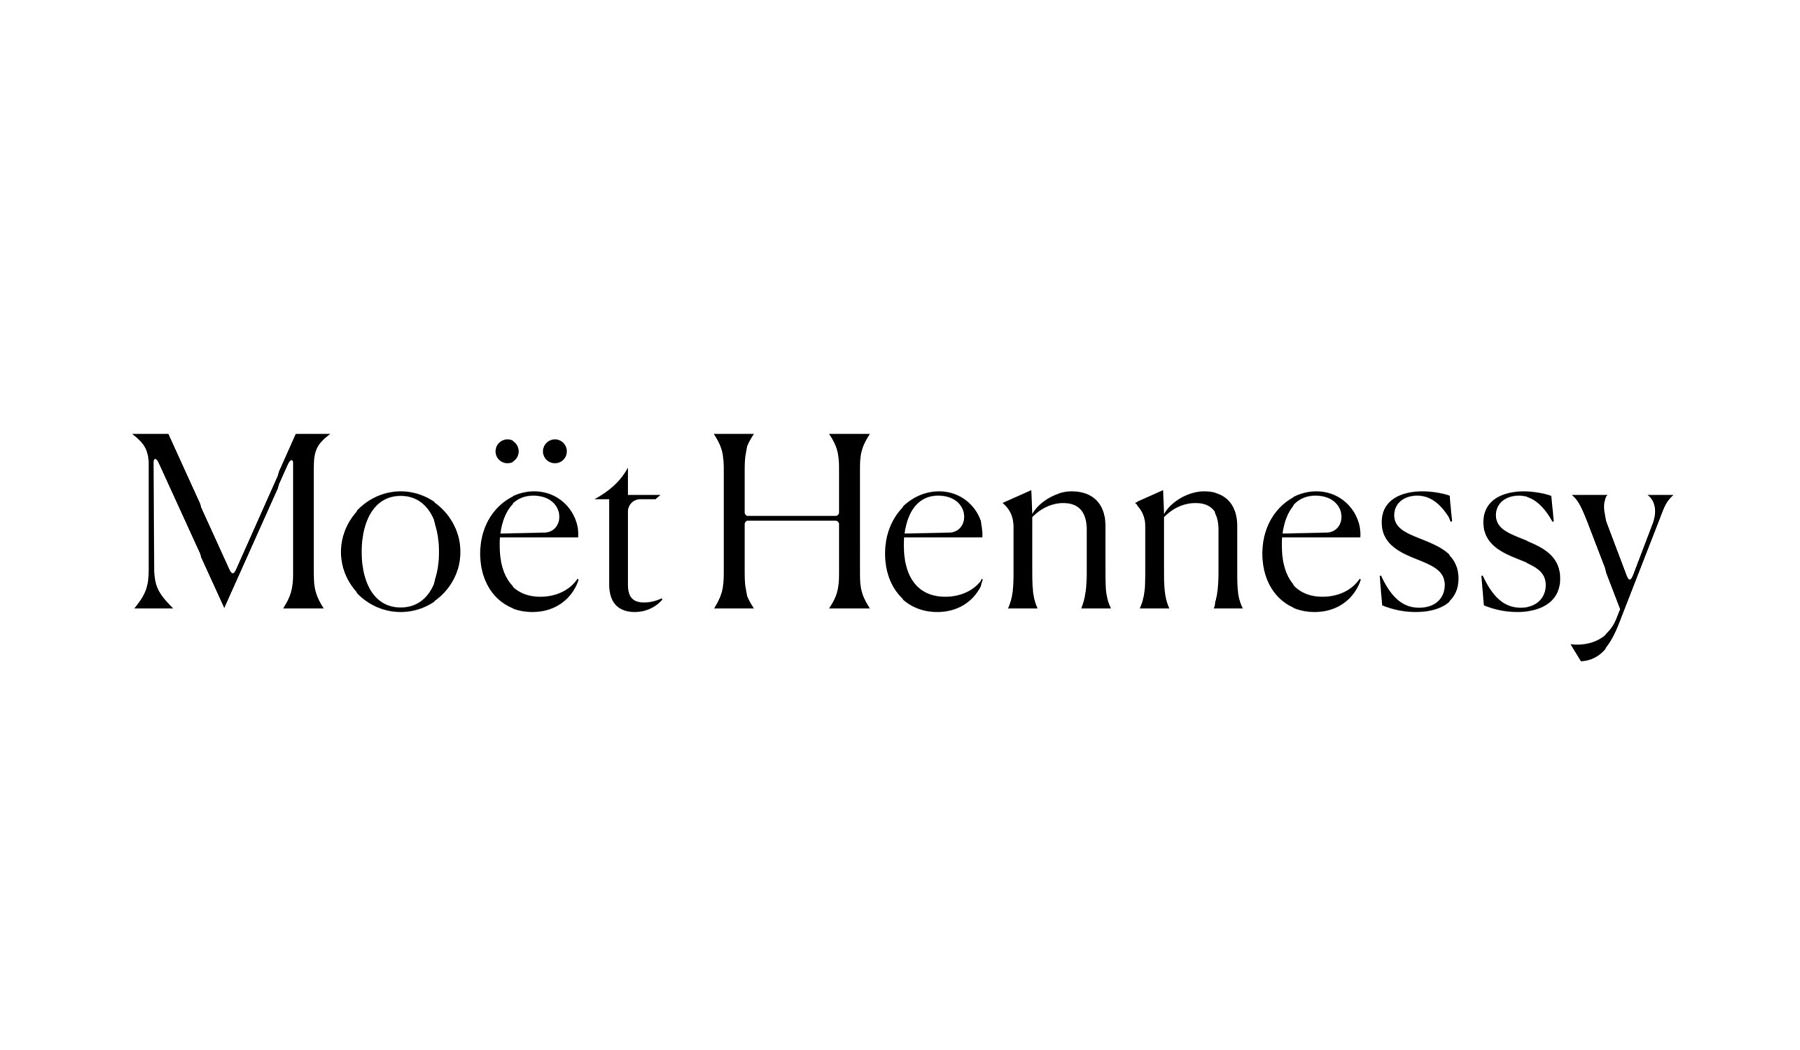 Client - Moet Hennesy